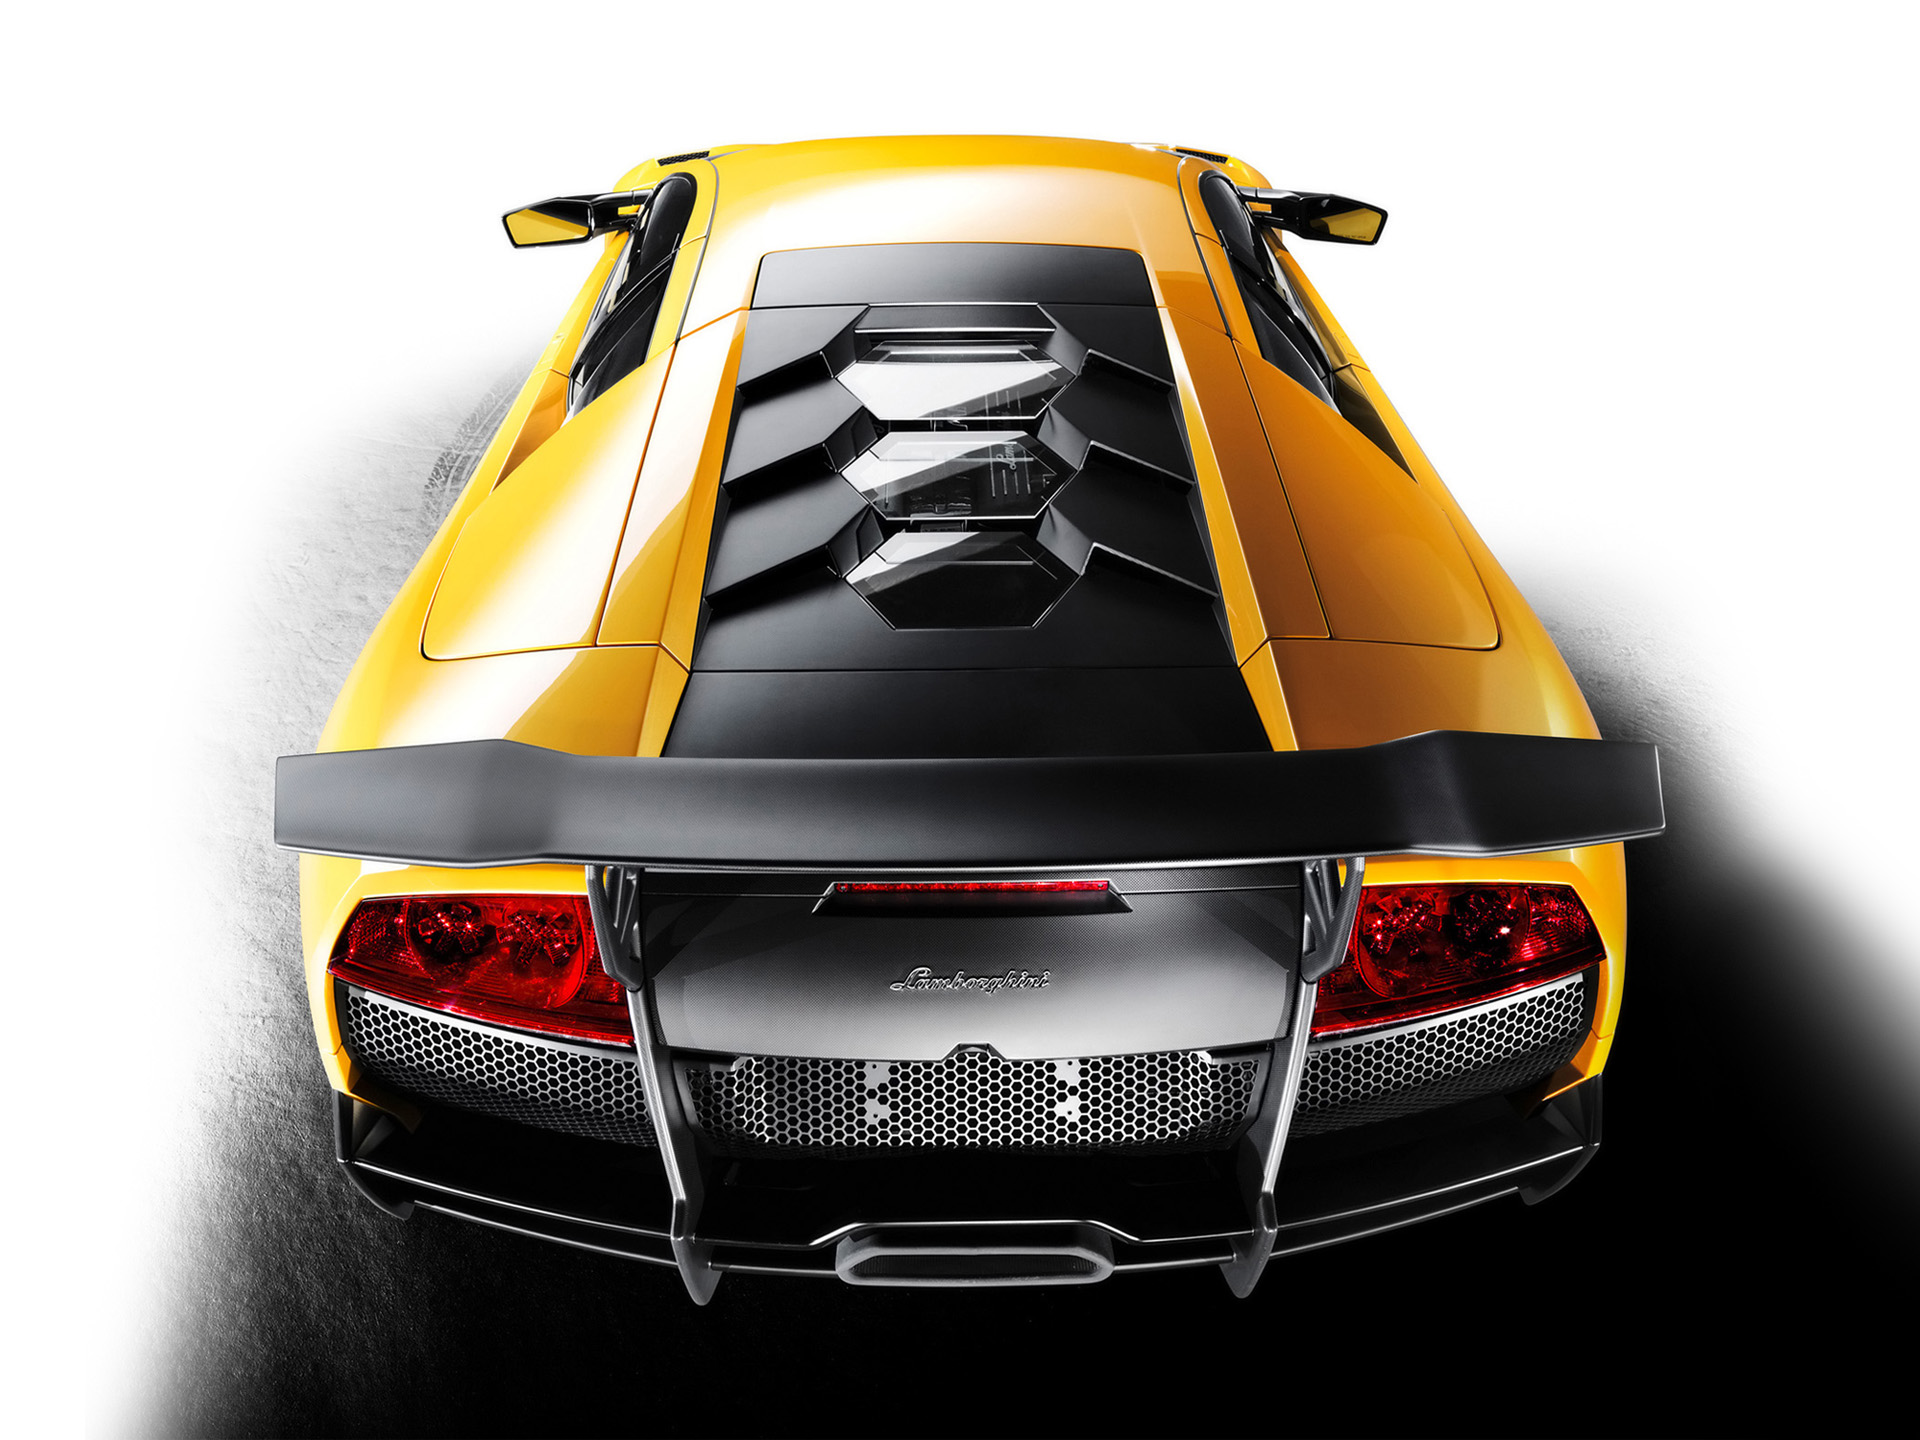  2009 Lamborghini Murcielago LP670-4 Super Veloce Wallpaper.